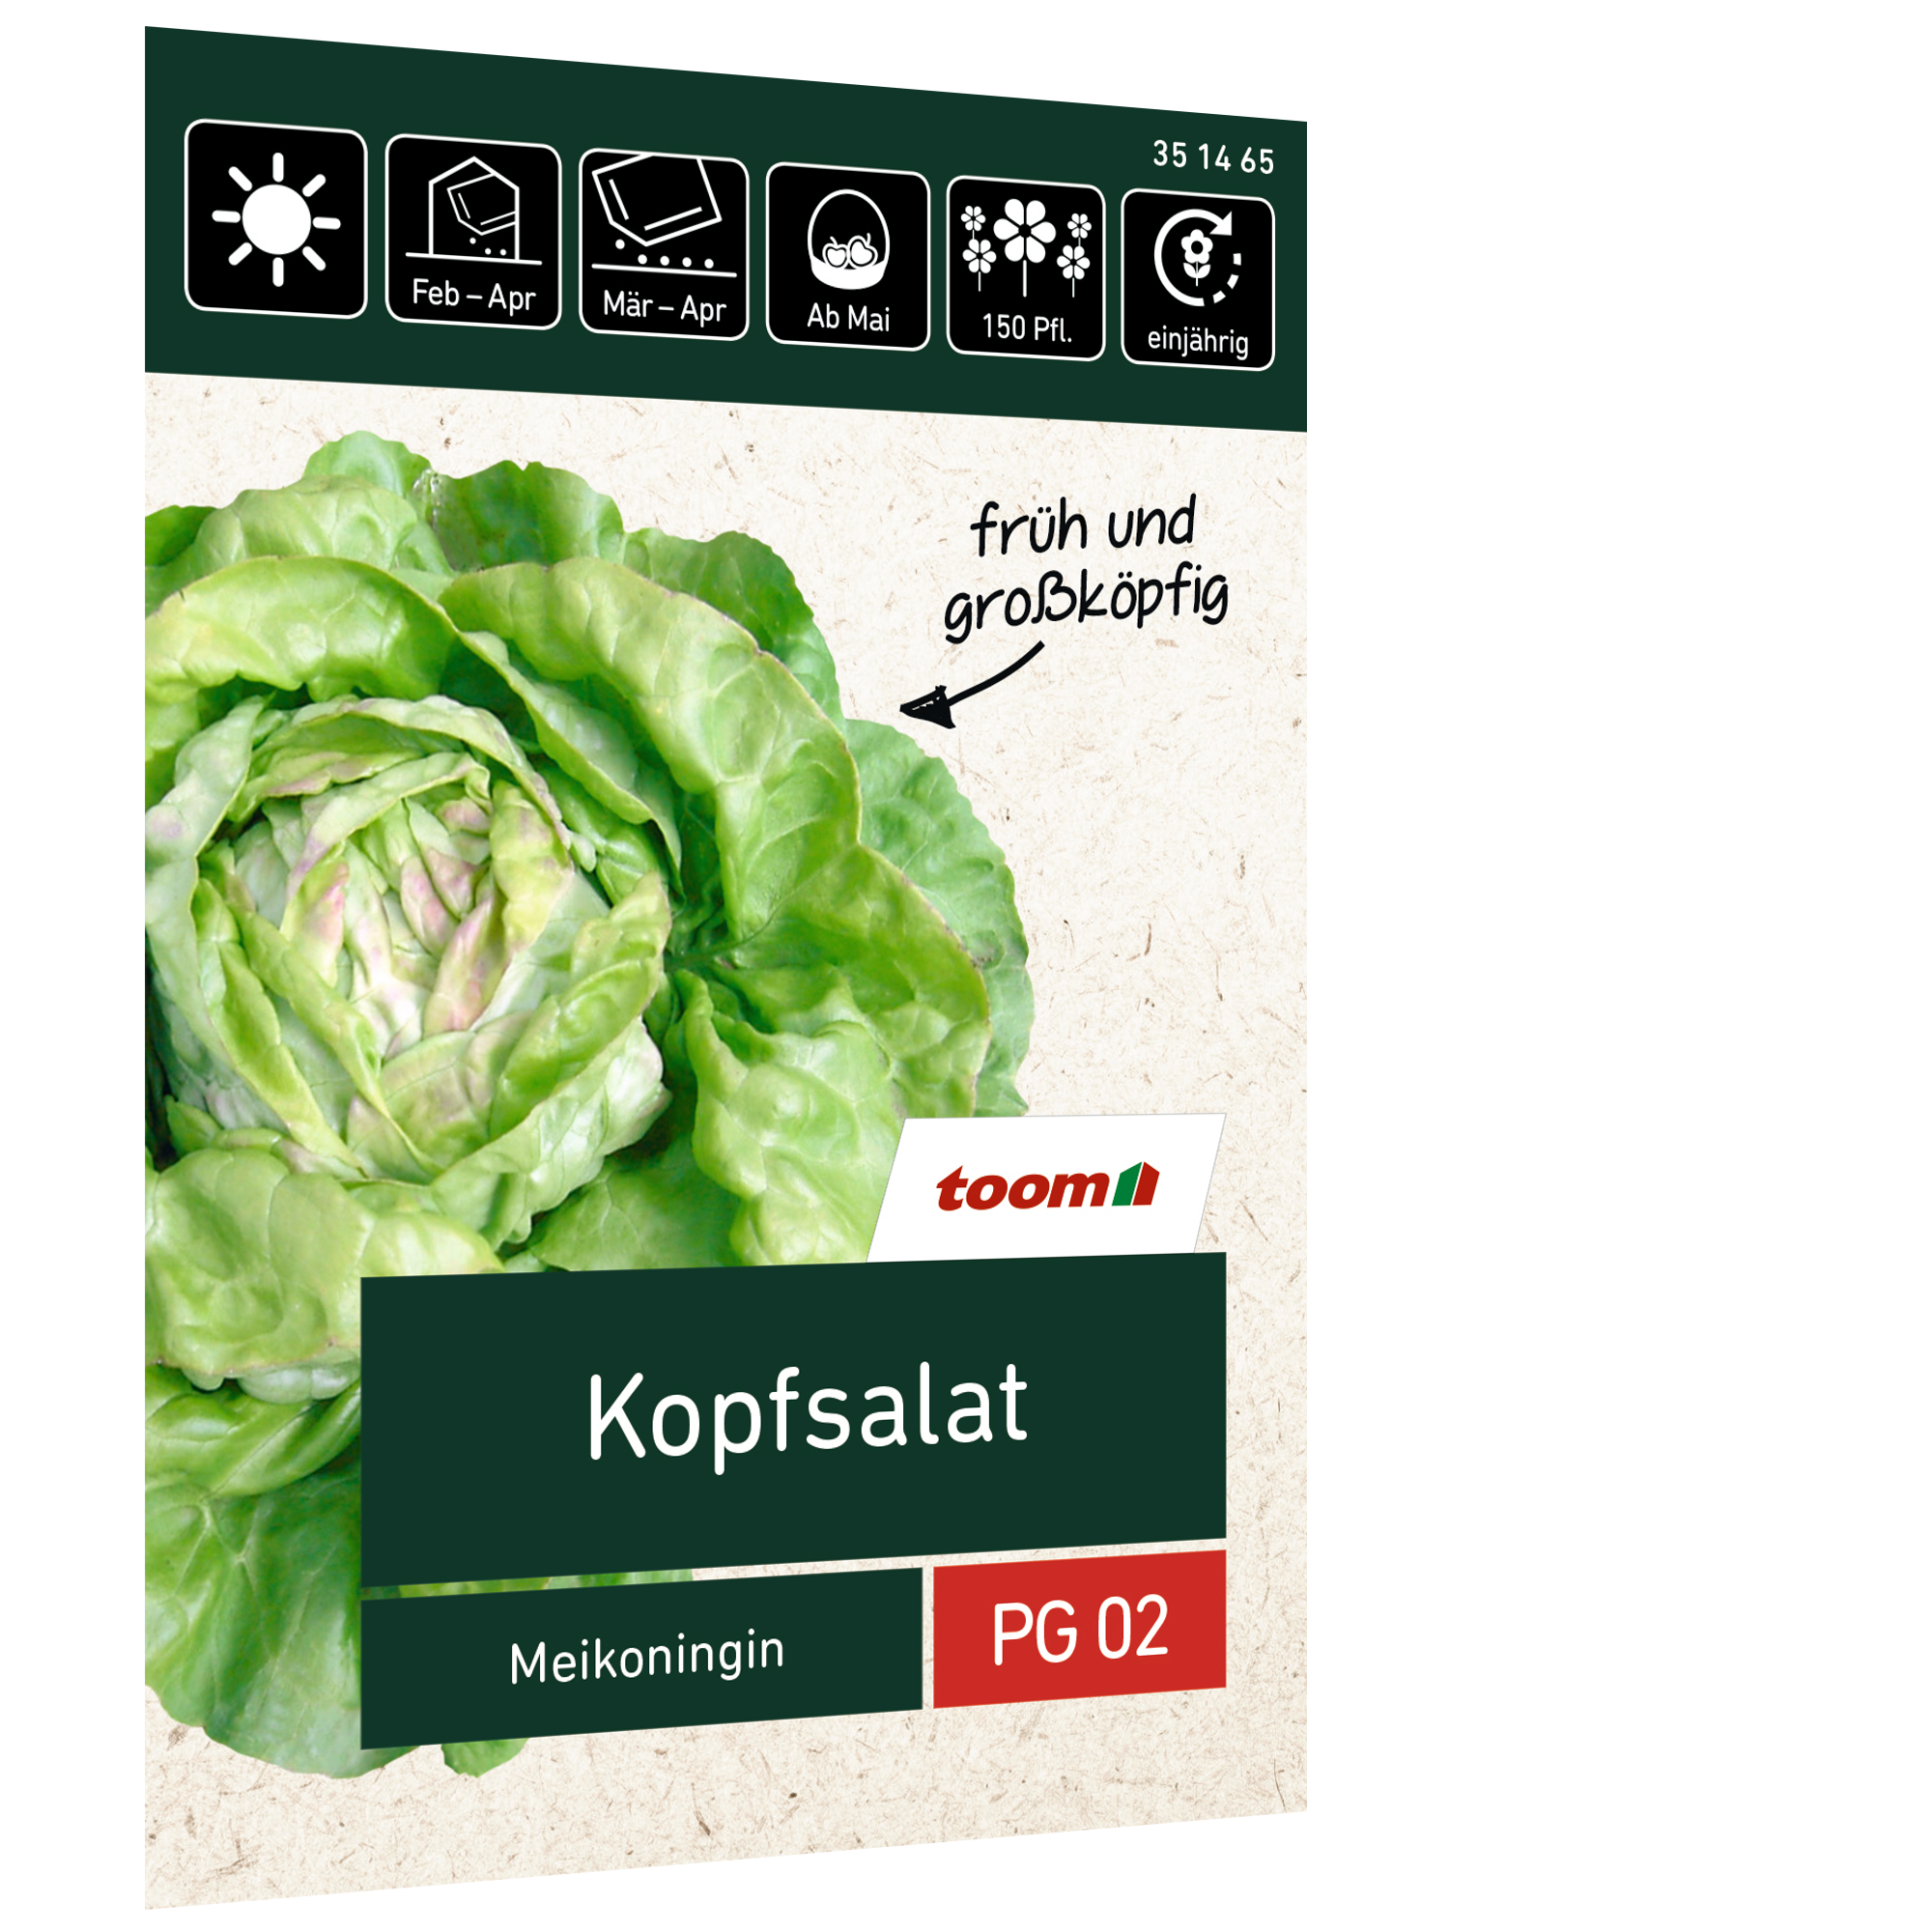 Kopfsalat 'Meikoningin' + product picture